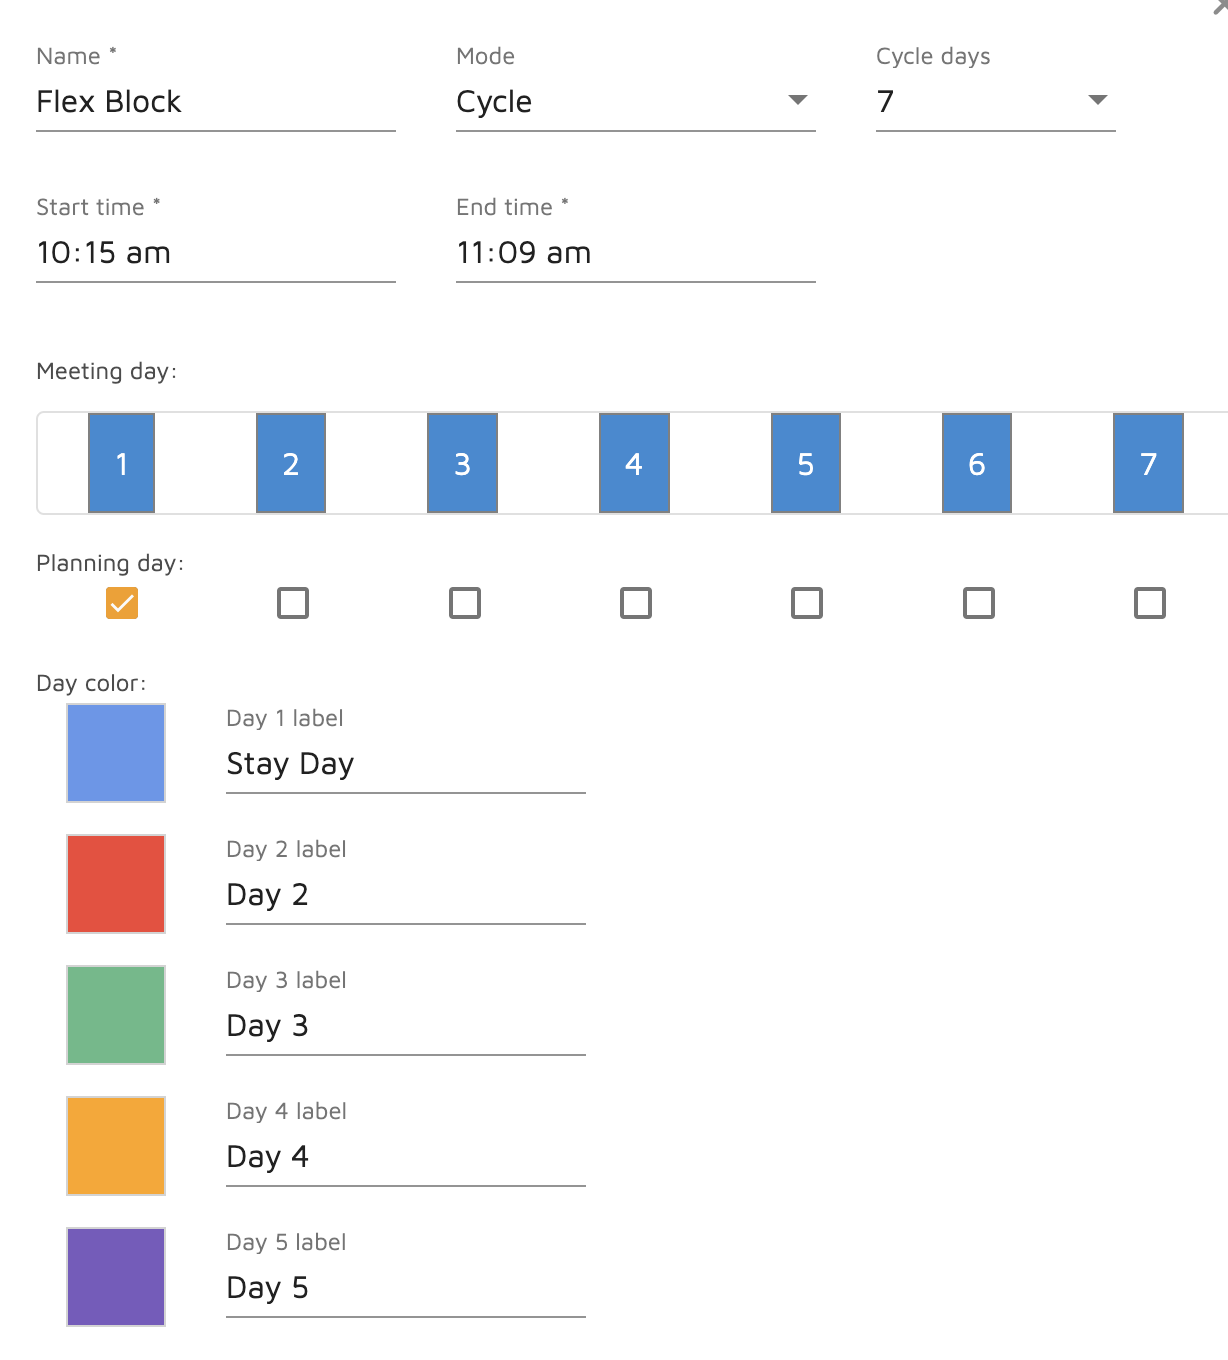 Flexible configuration for any flex block schedule